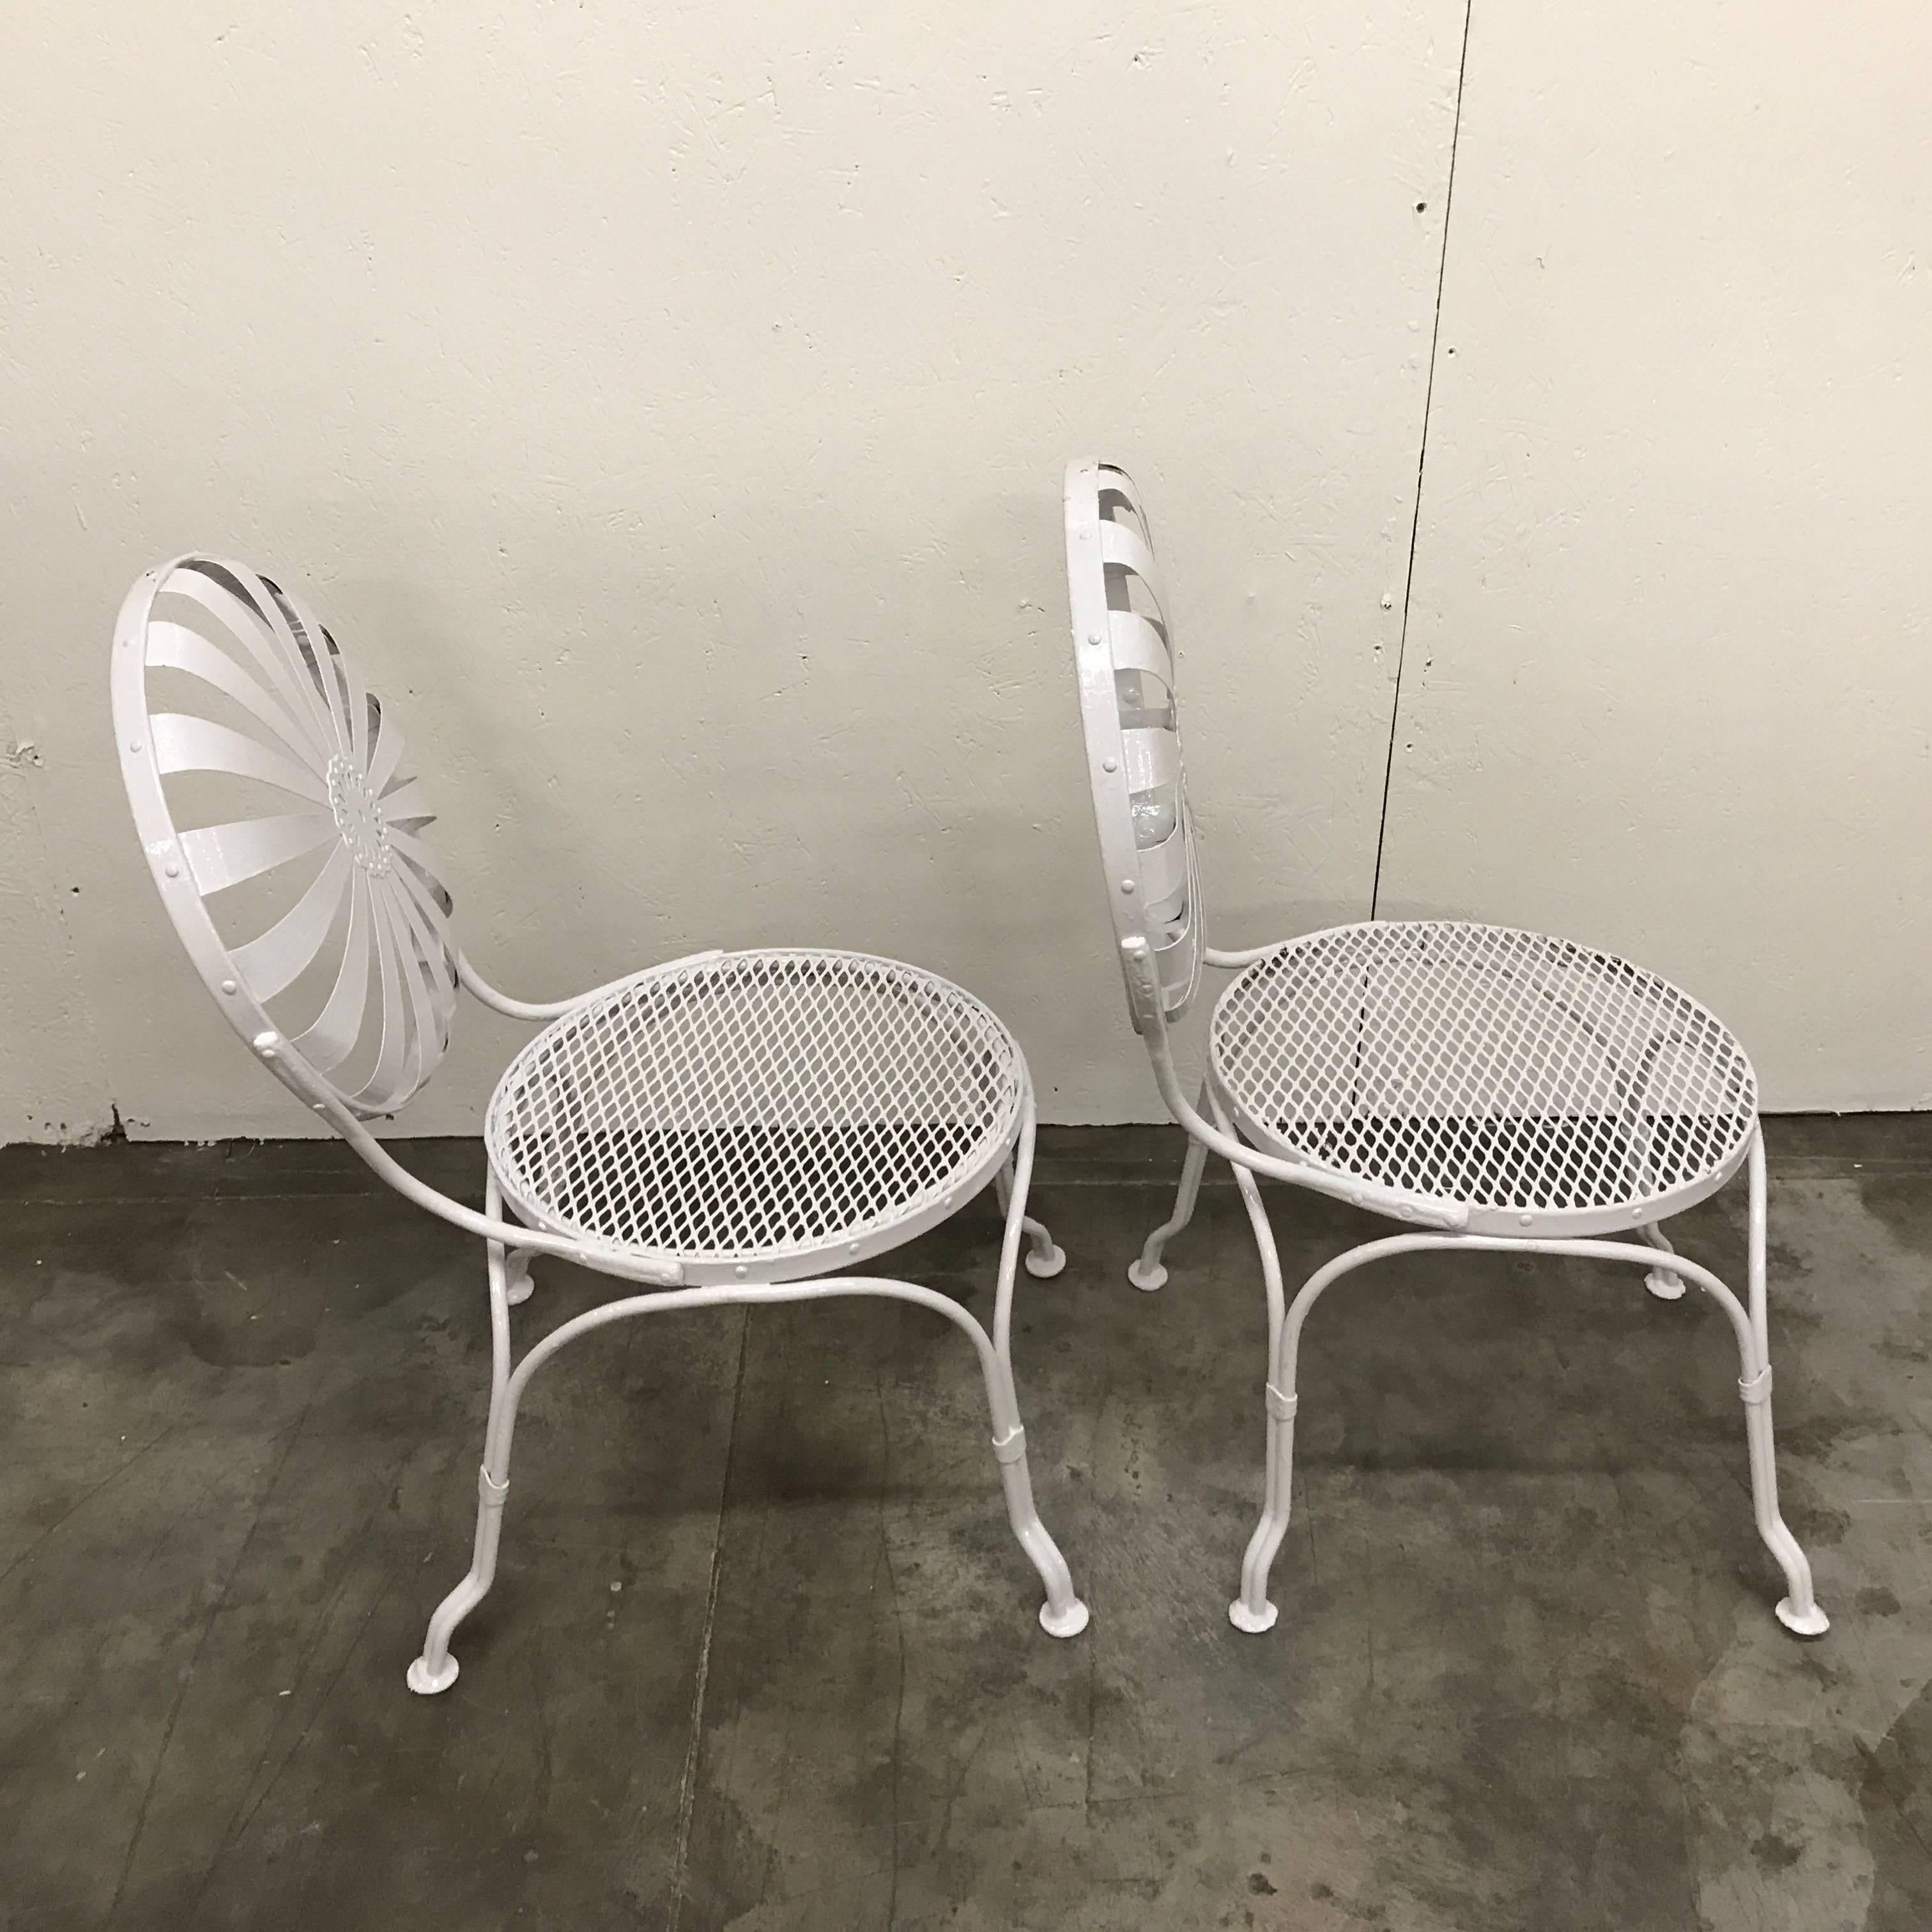 French Set of Six Sunburst Back Garden Chairs, by Francois Carré